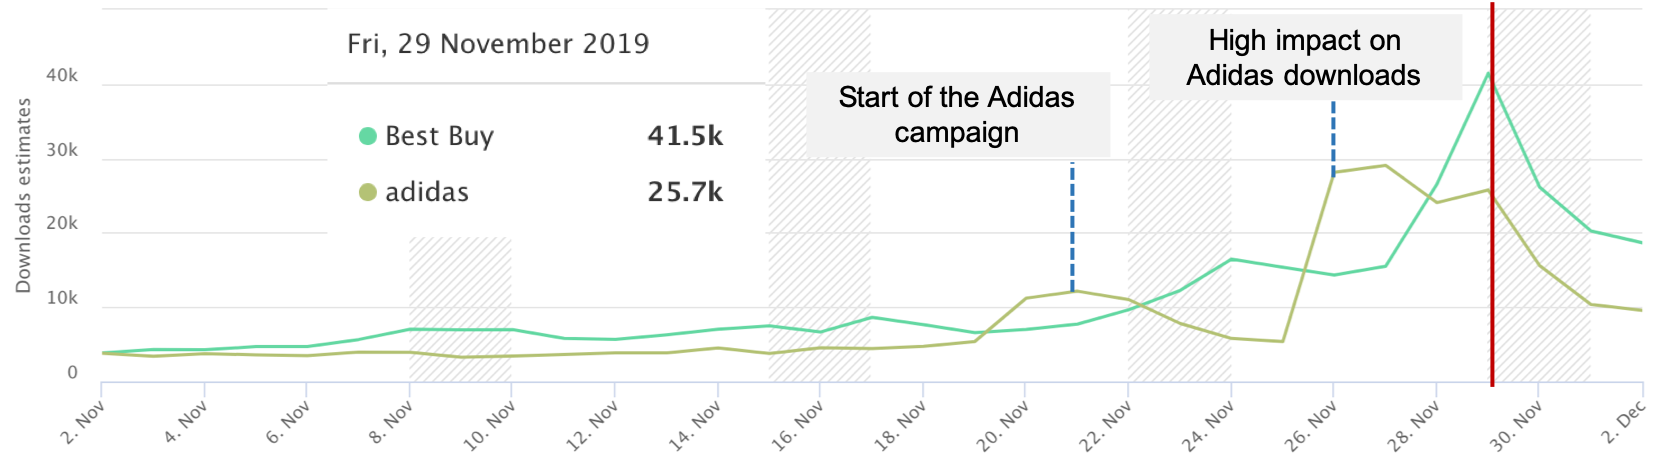 AppTweak ASO Tool - Downloads estimates of Best Buy and Adidas in November 2019 (IOS, US)